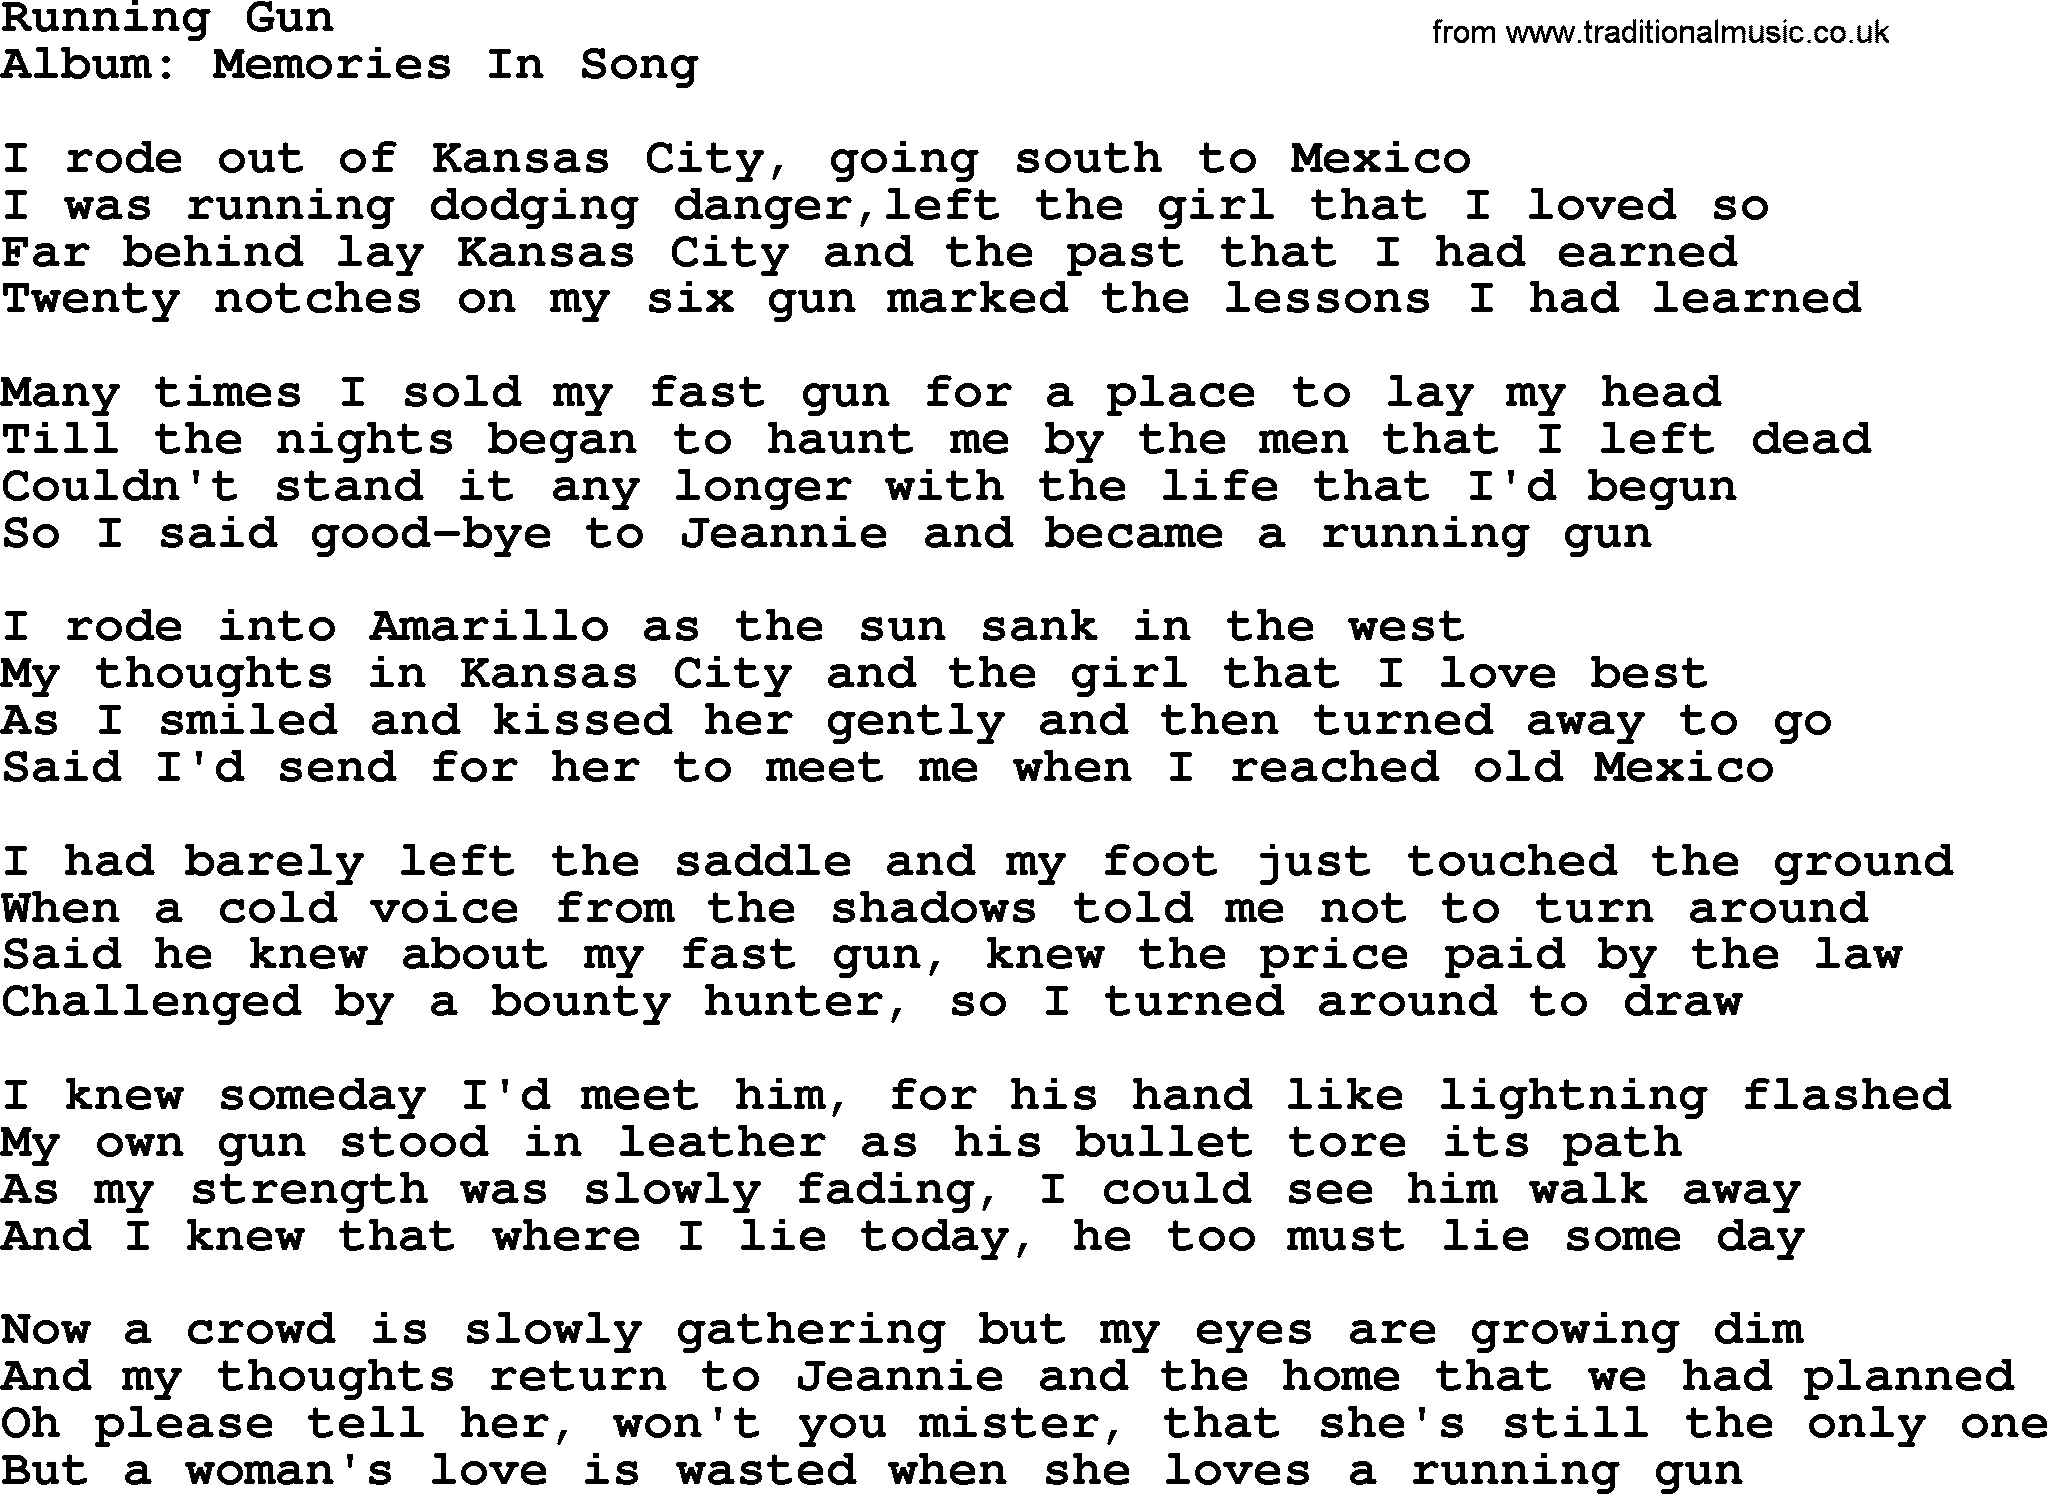 Marty Robbins song: Running Gun, lyrics